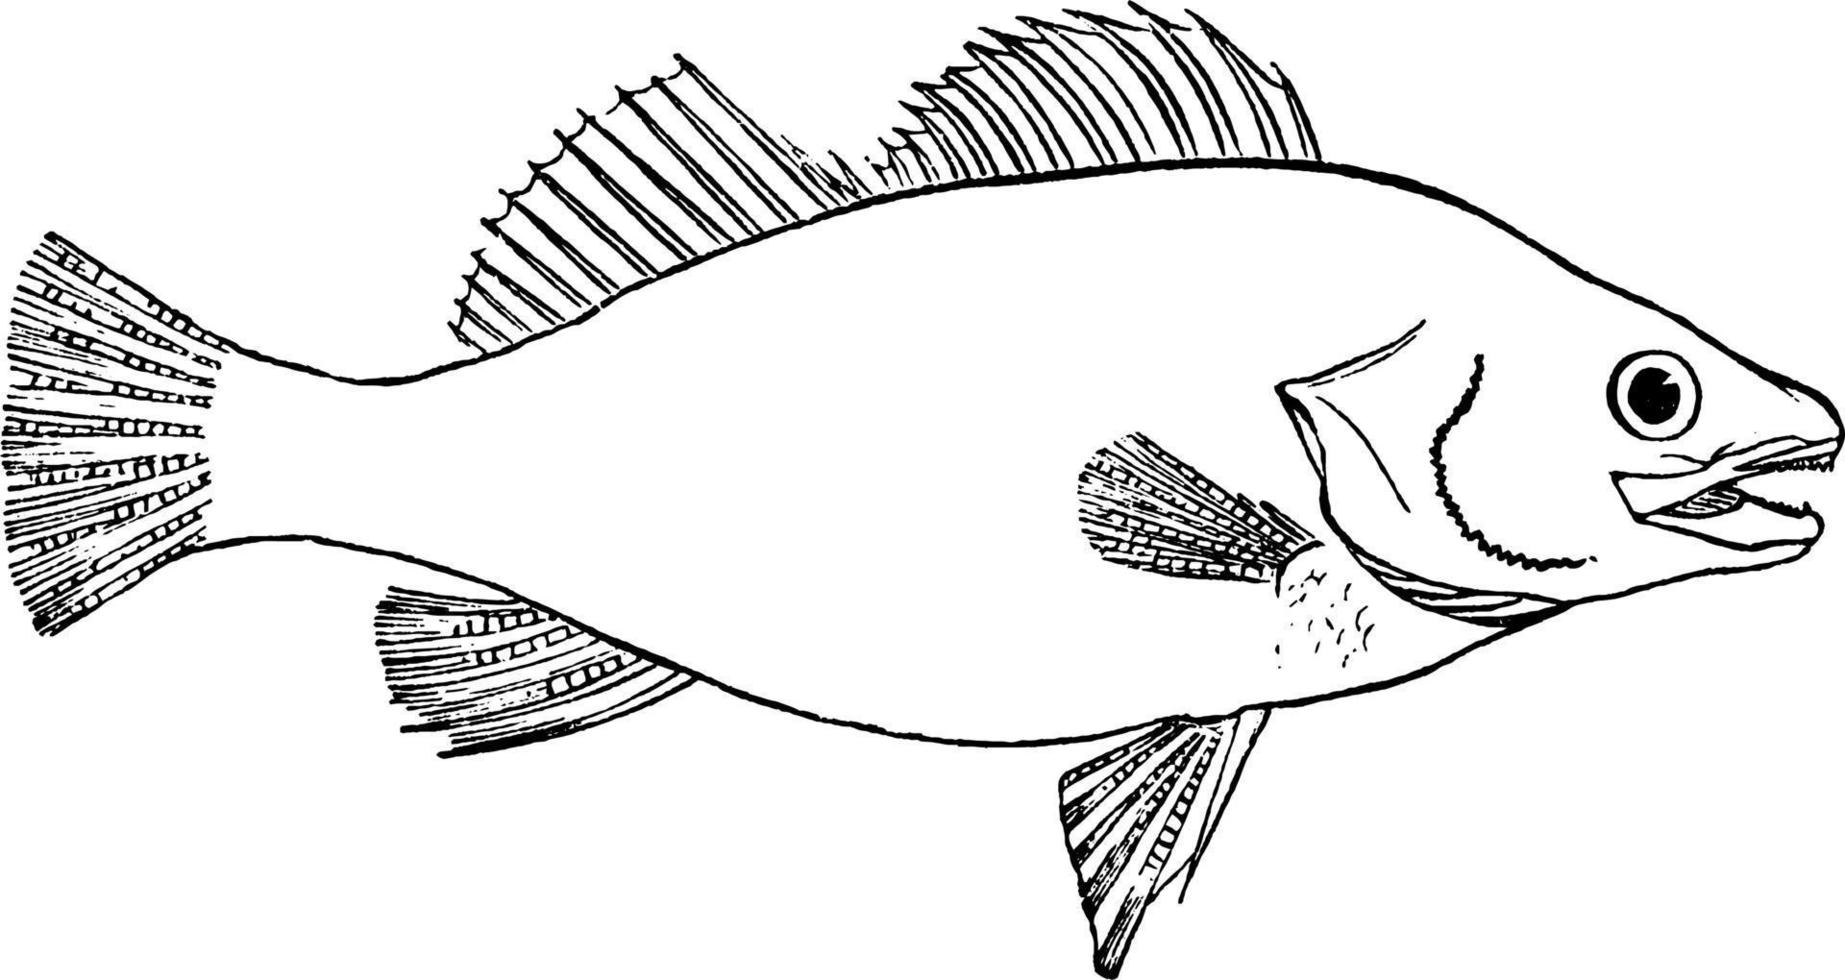 Fish, vintage illustration. vector